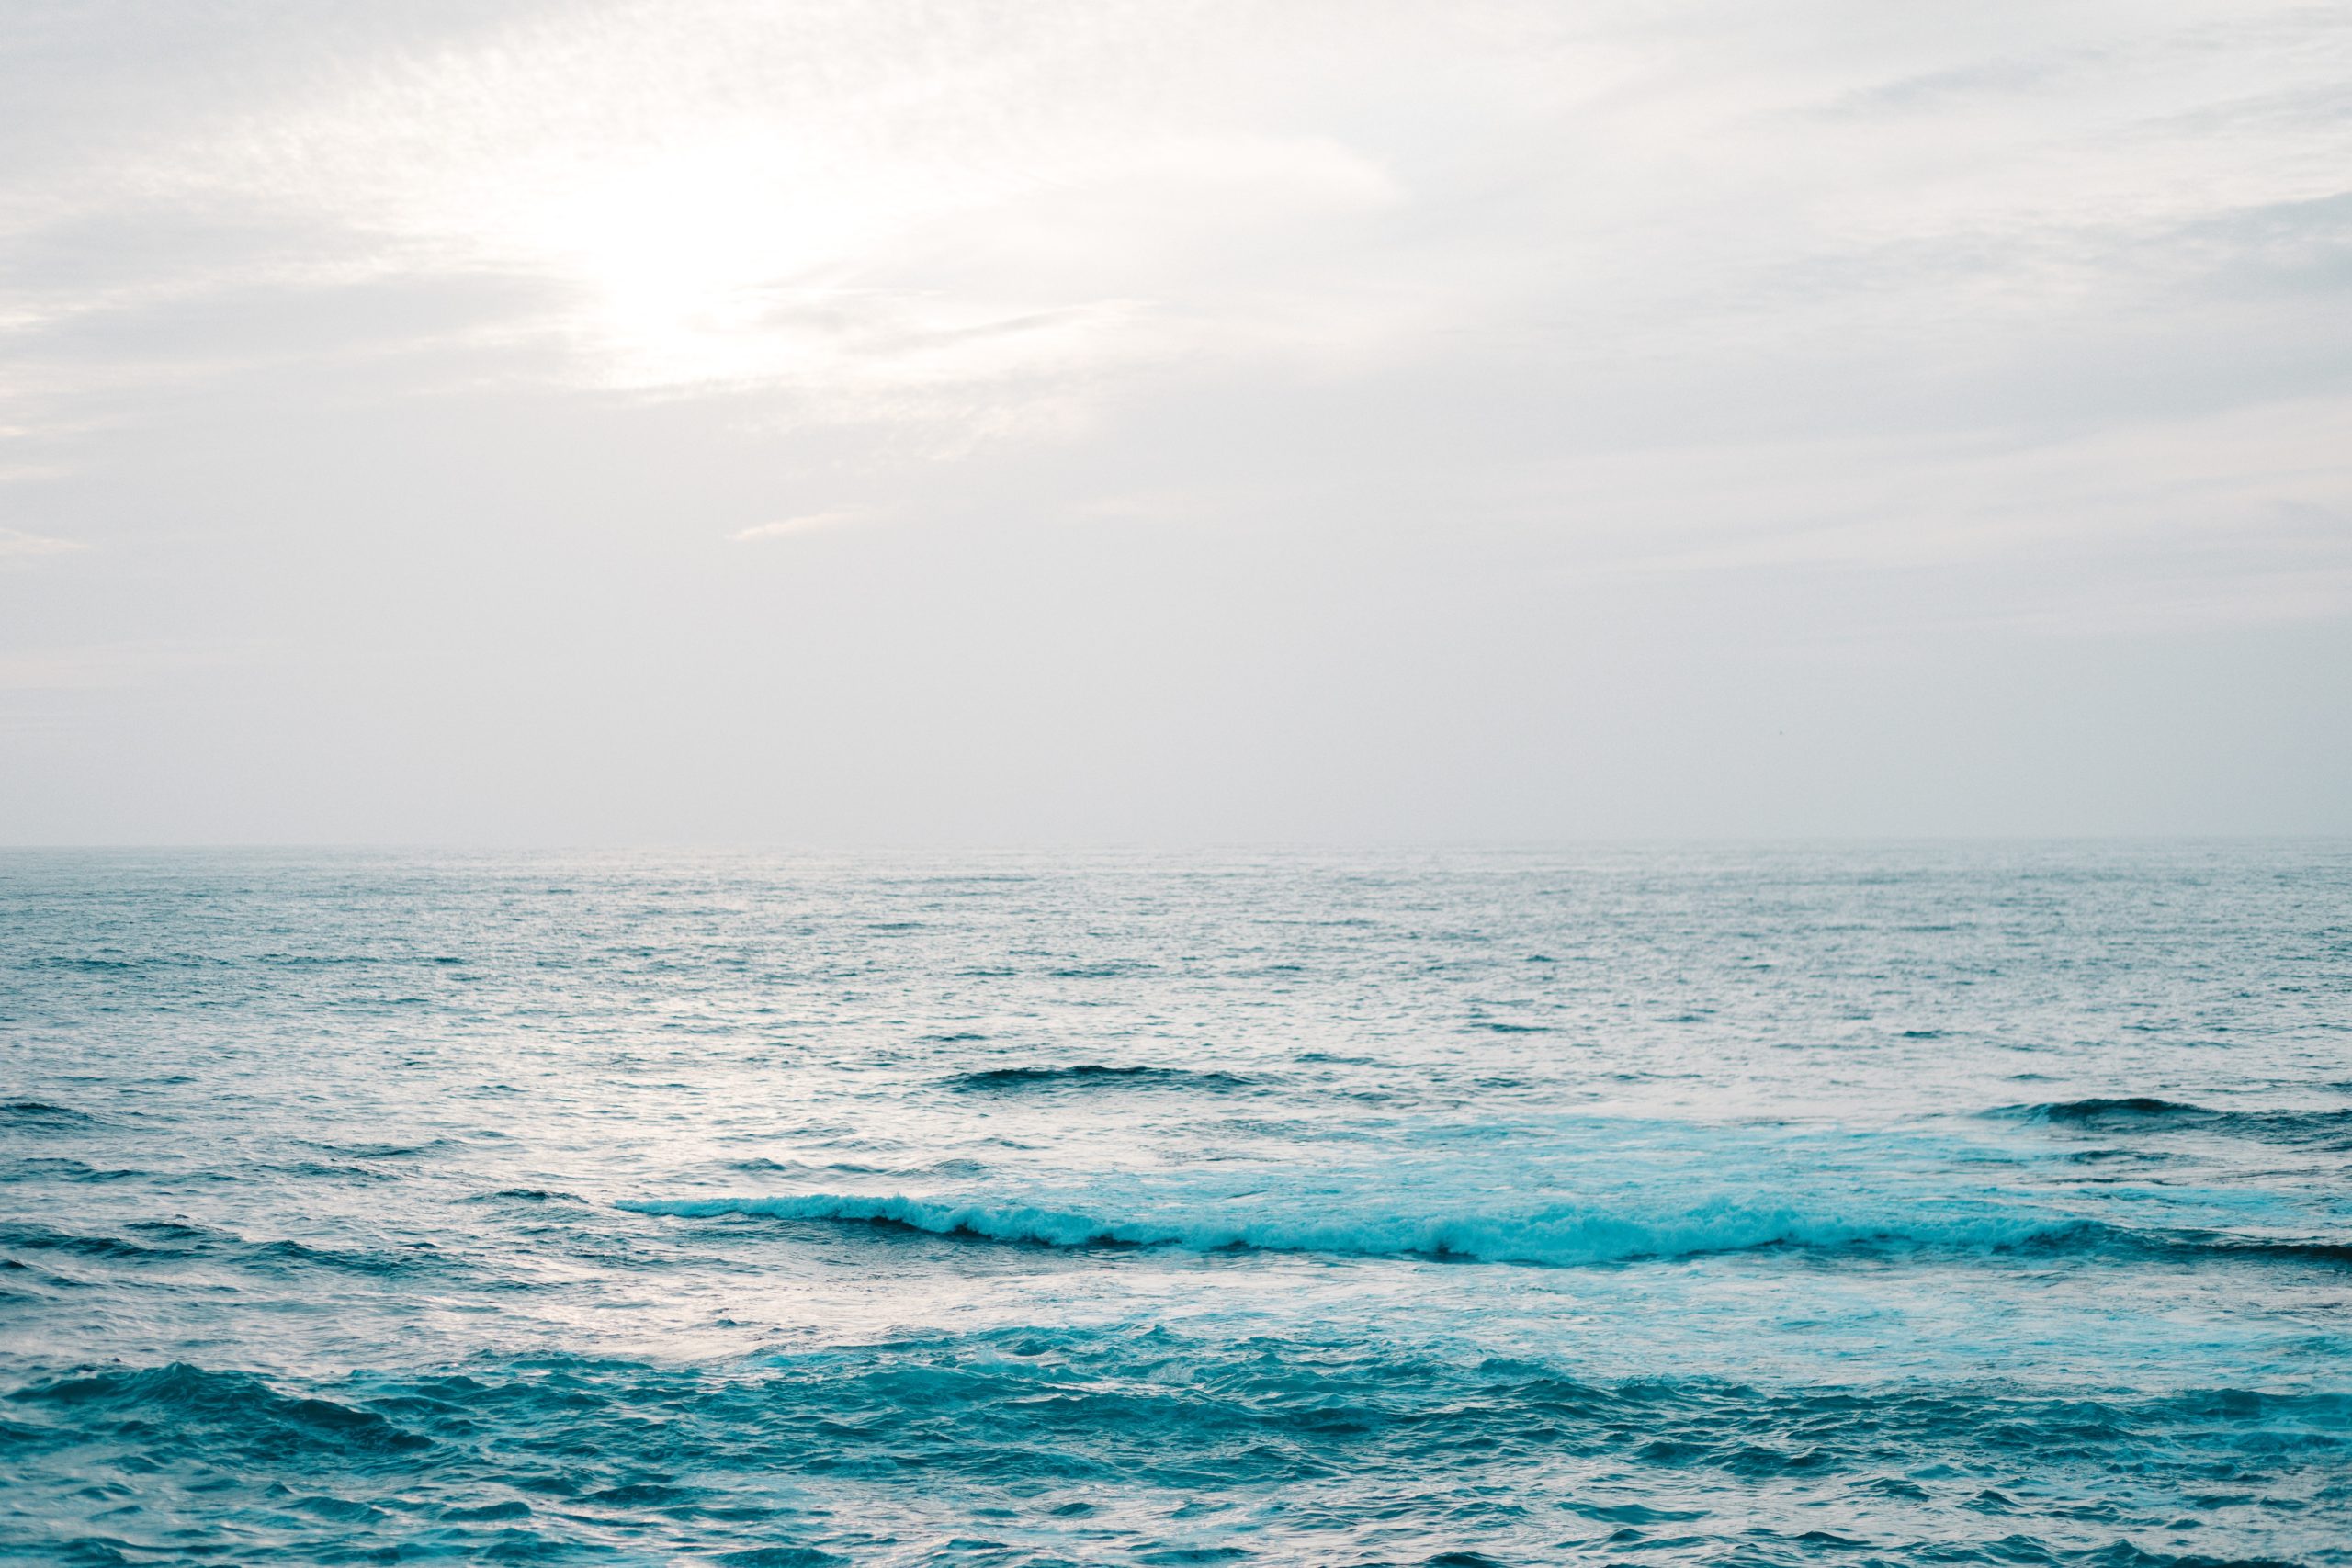 Calm blue waves, bright background